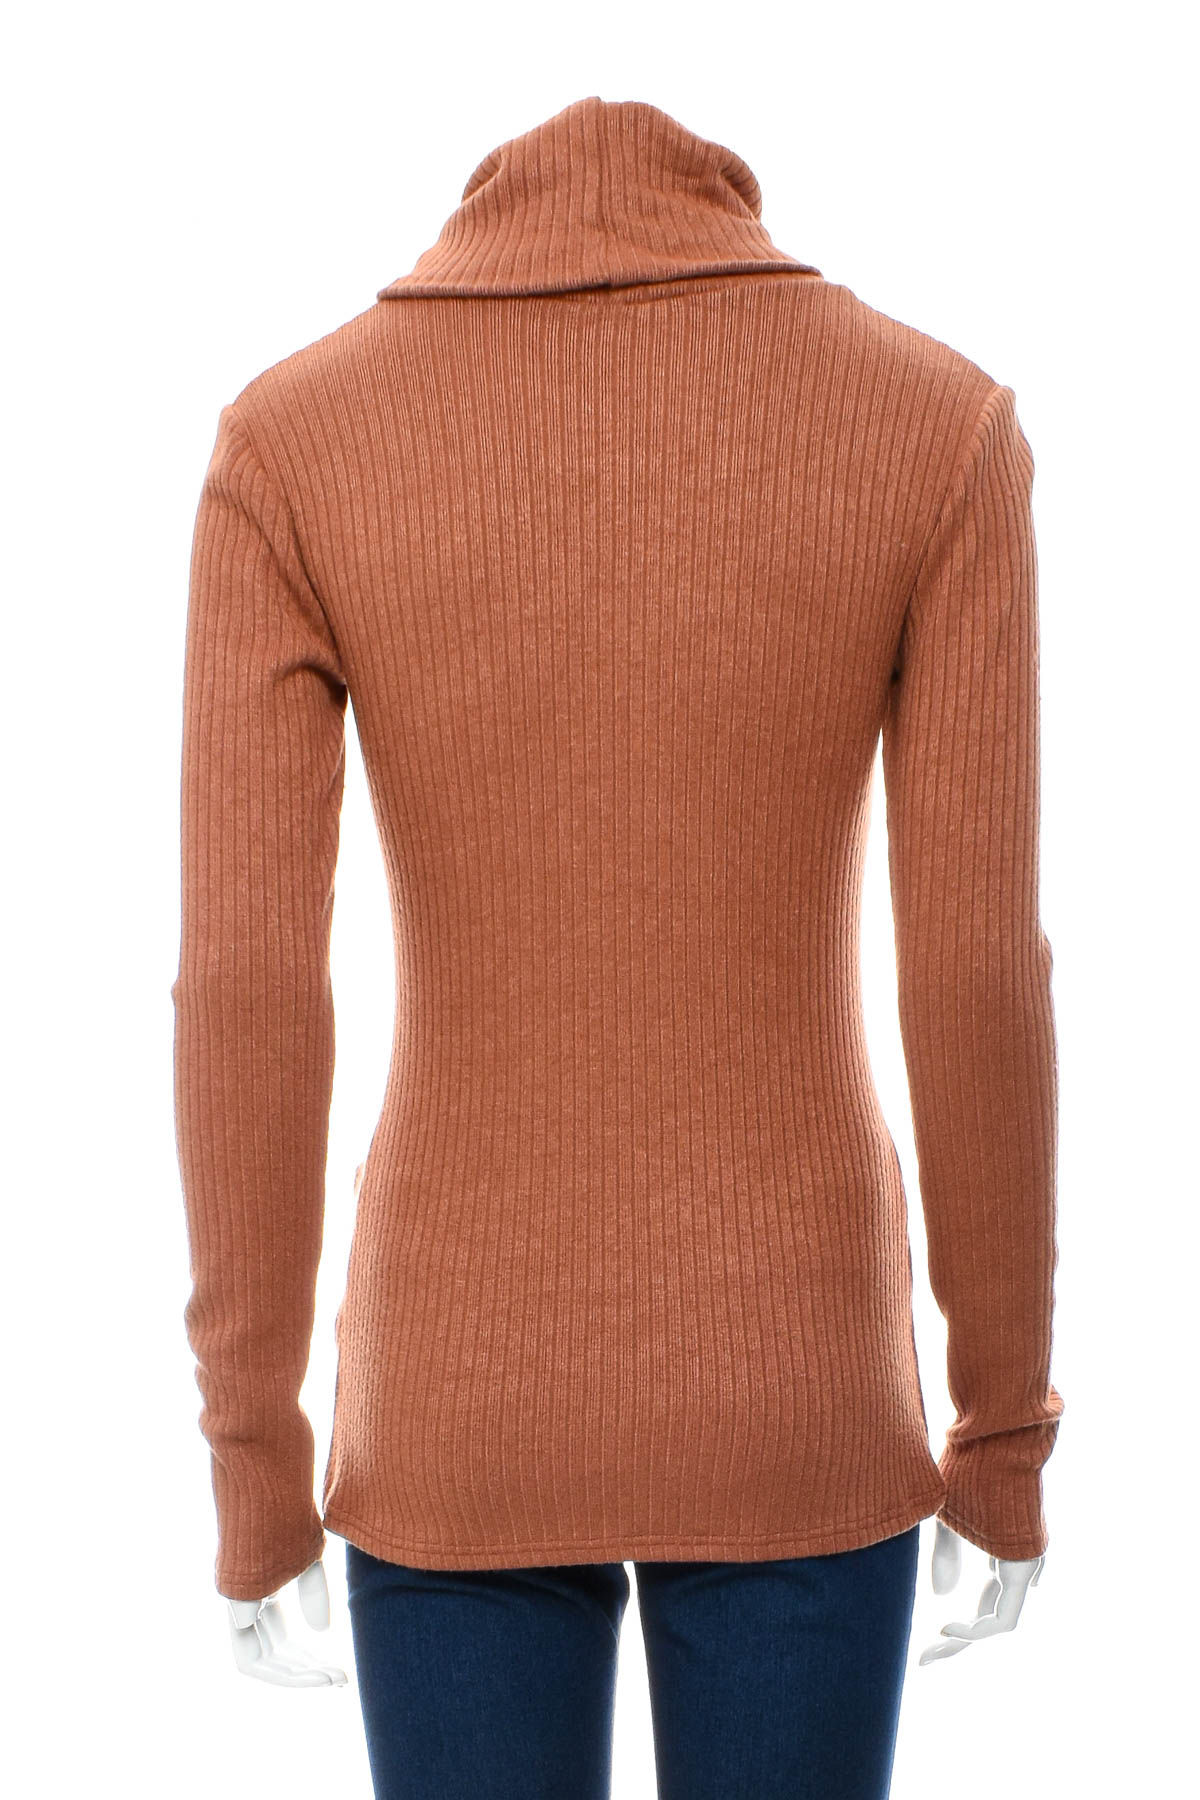 Women's sweater - METAMORPHOZA - 1